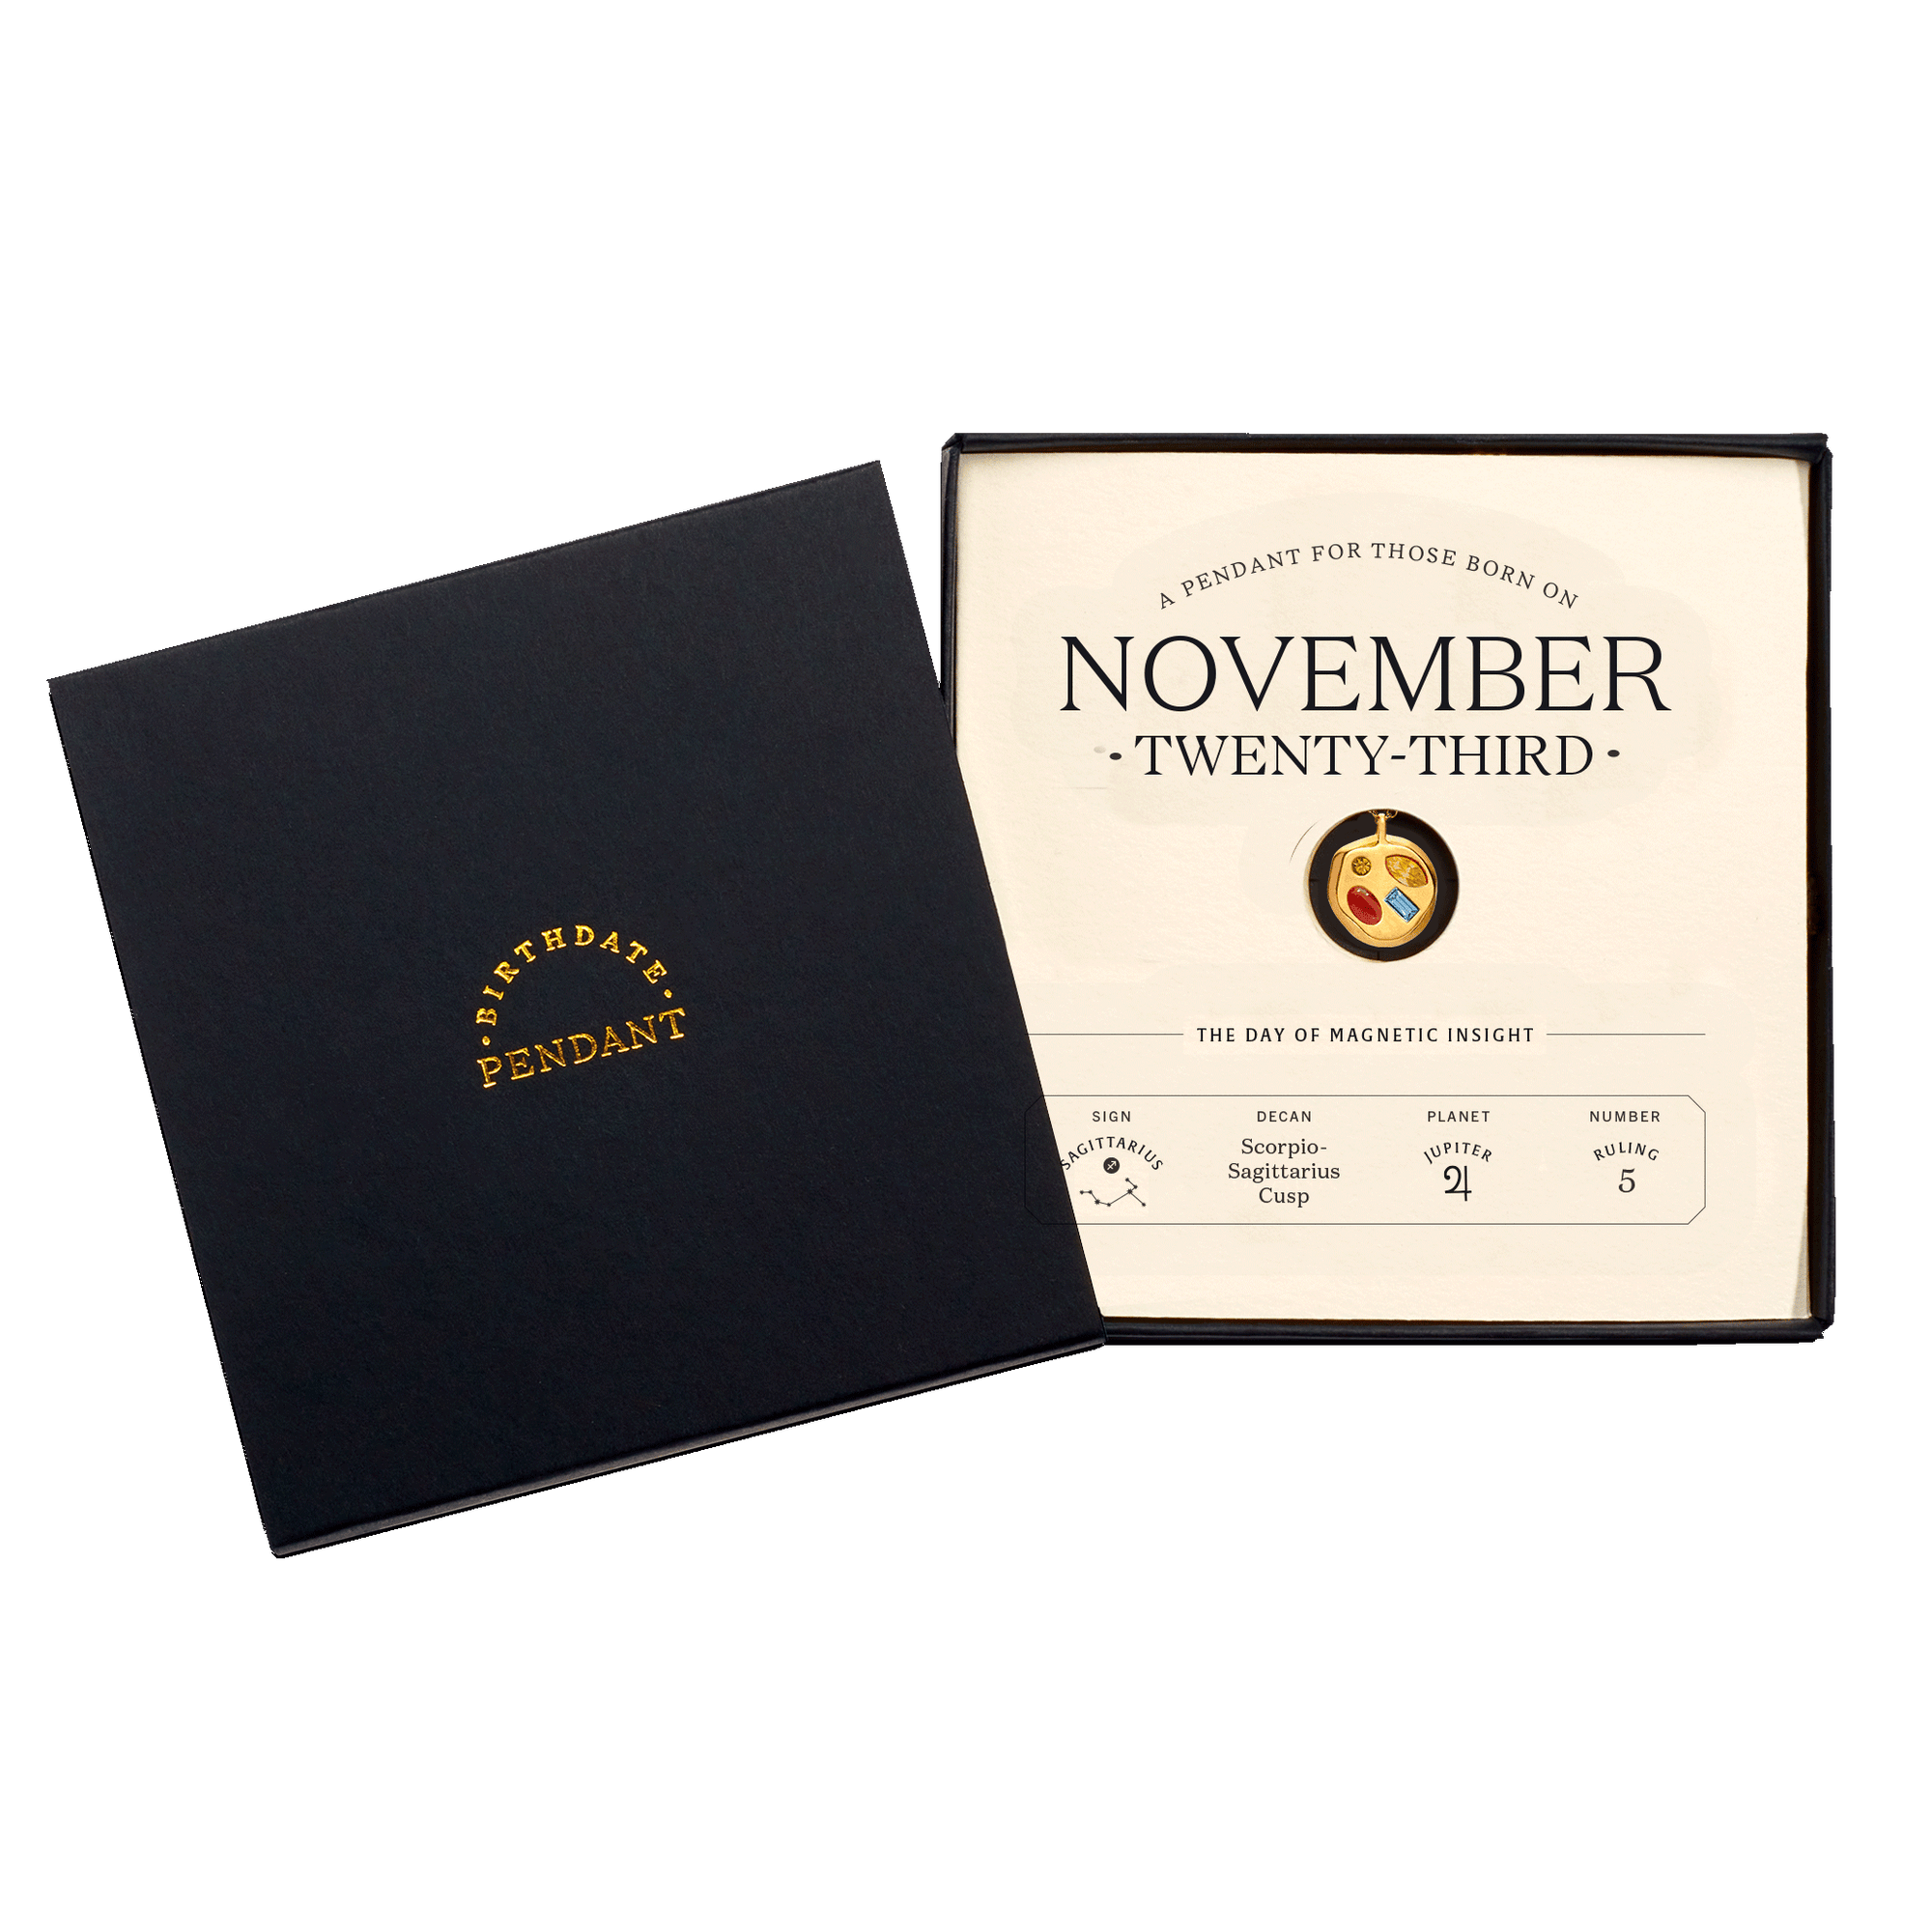 The November Twenty-Third Pendant inside its box